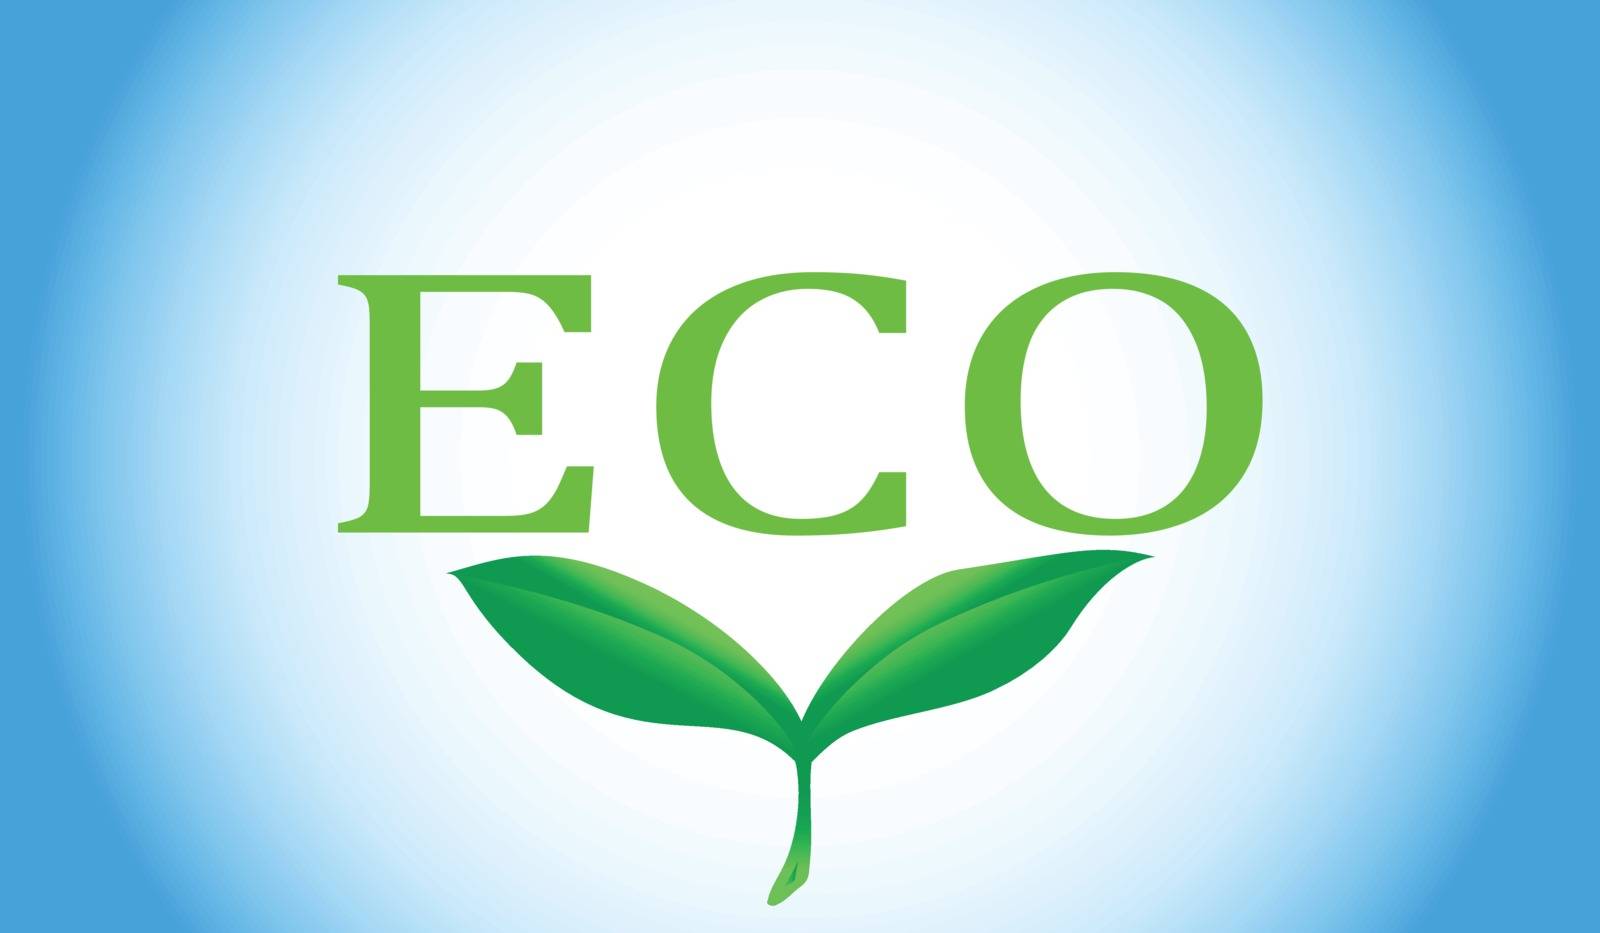 Eco concept by rinika